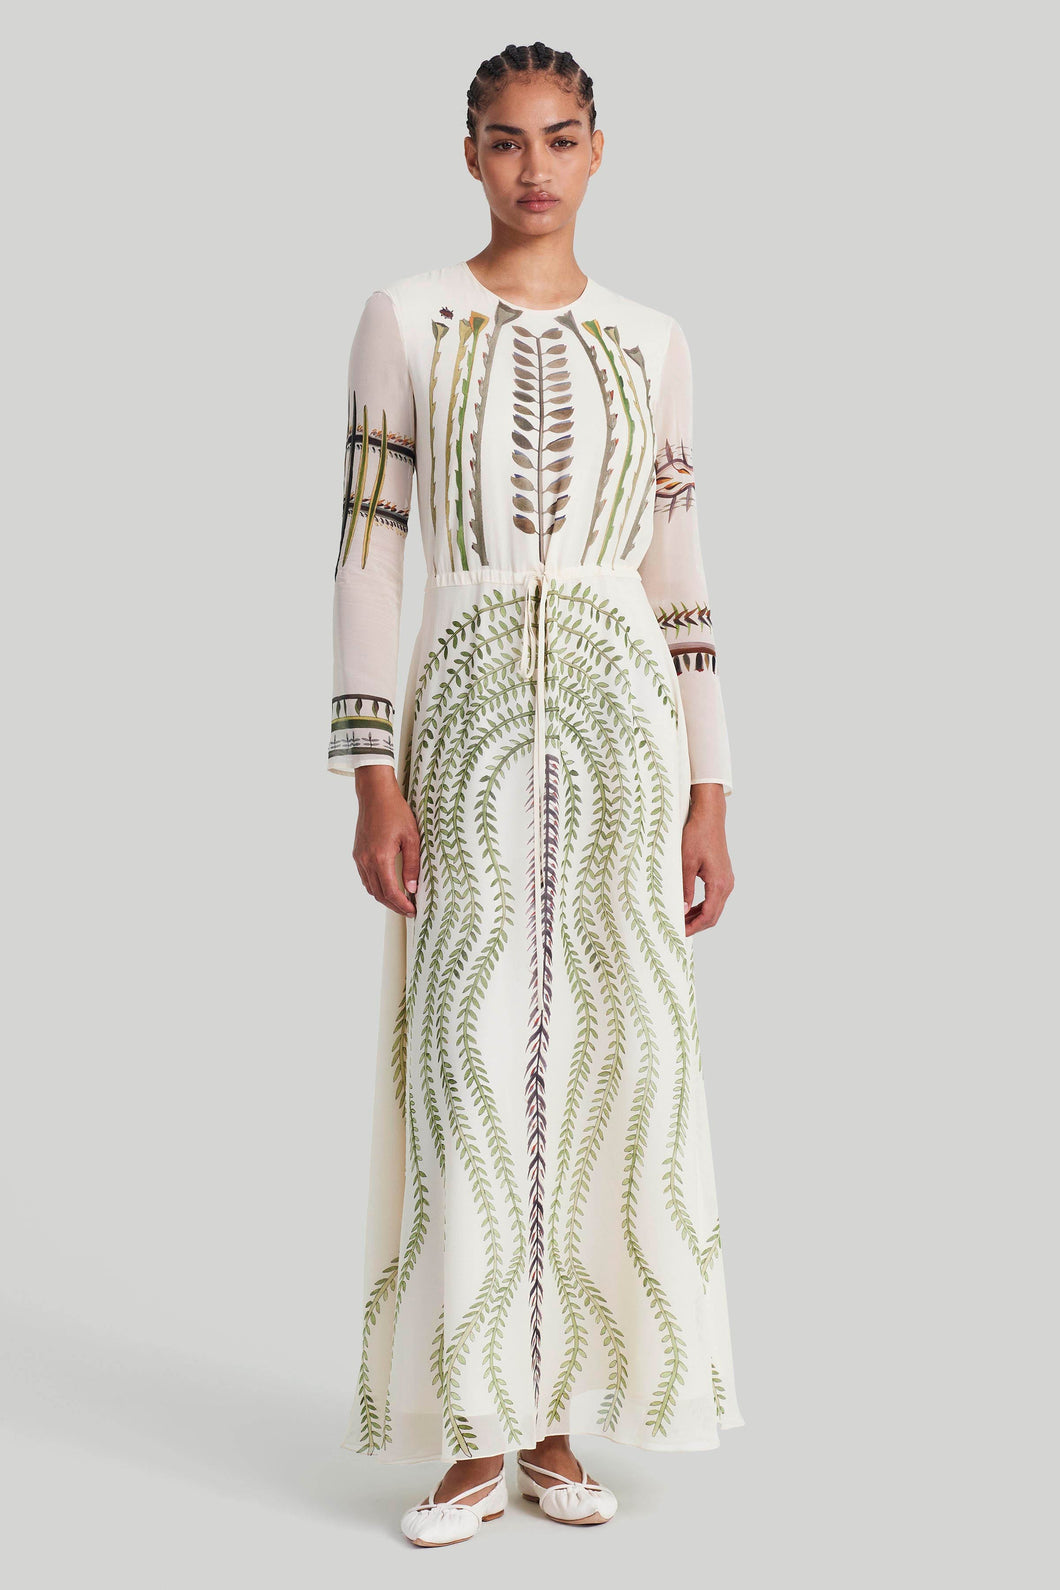 Altuzarra_'Sybbeline' Dress_Ivory Botanical